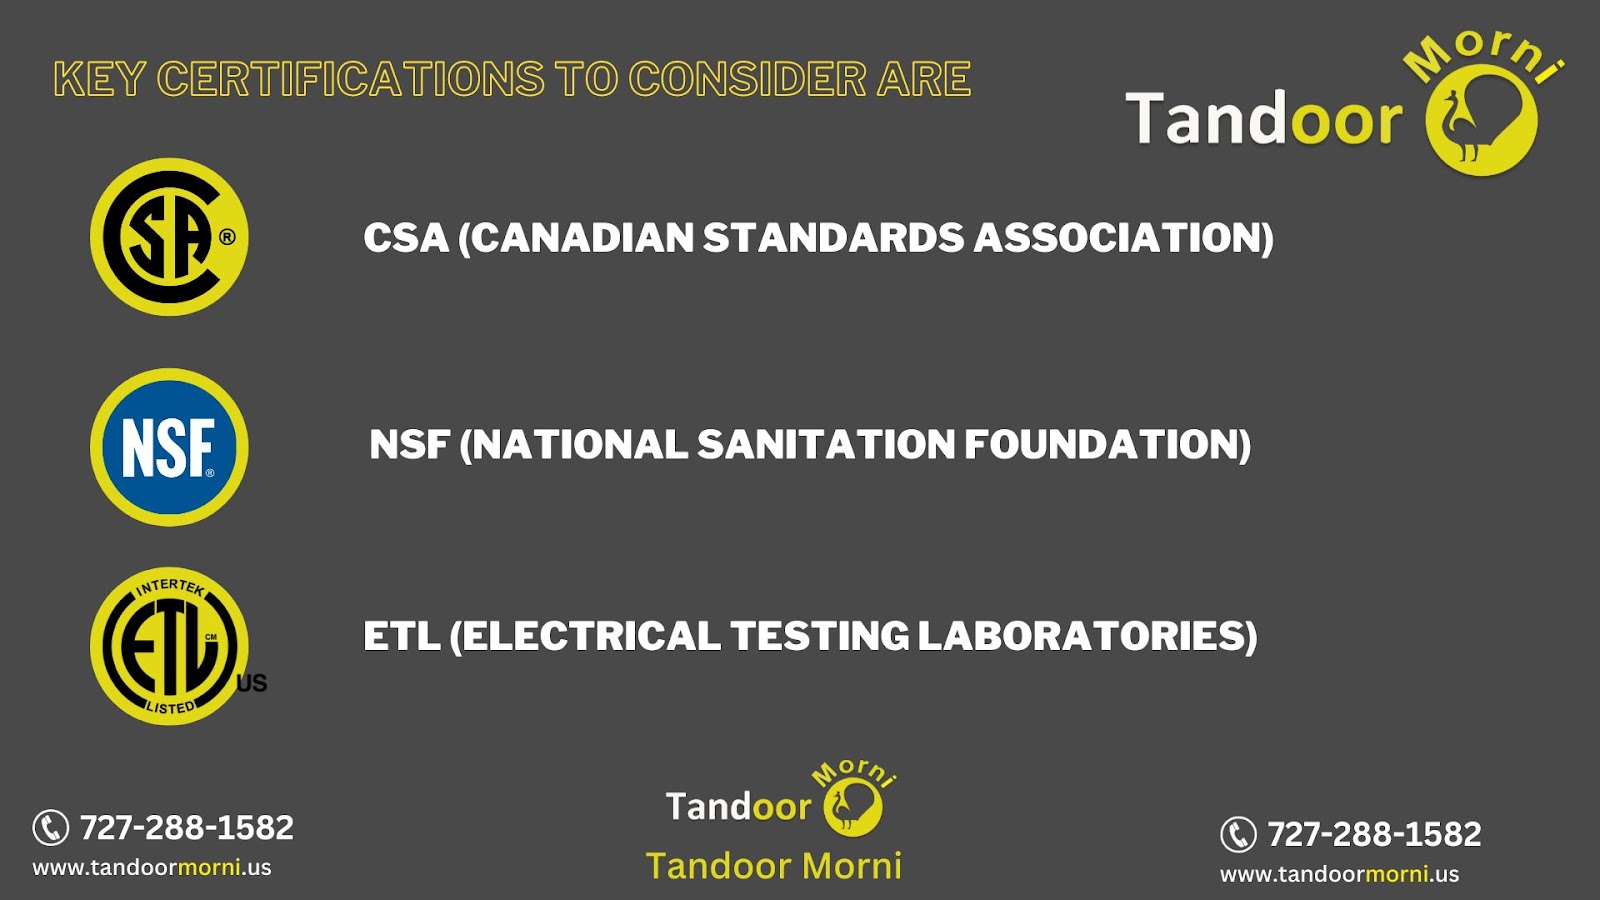 Consider purchasing CSA approved tandoors, NSF certified tandoors, or ETL certified tandoors.